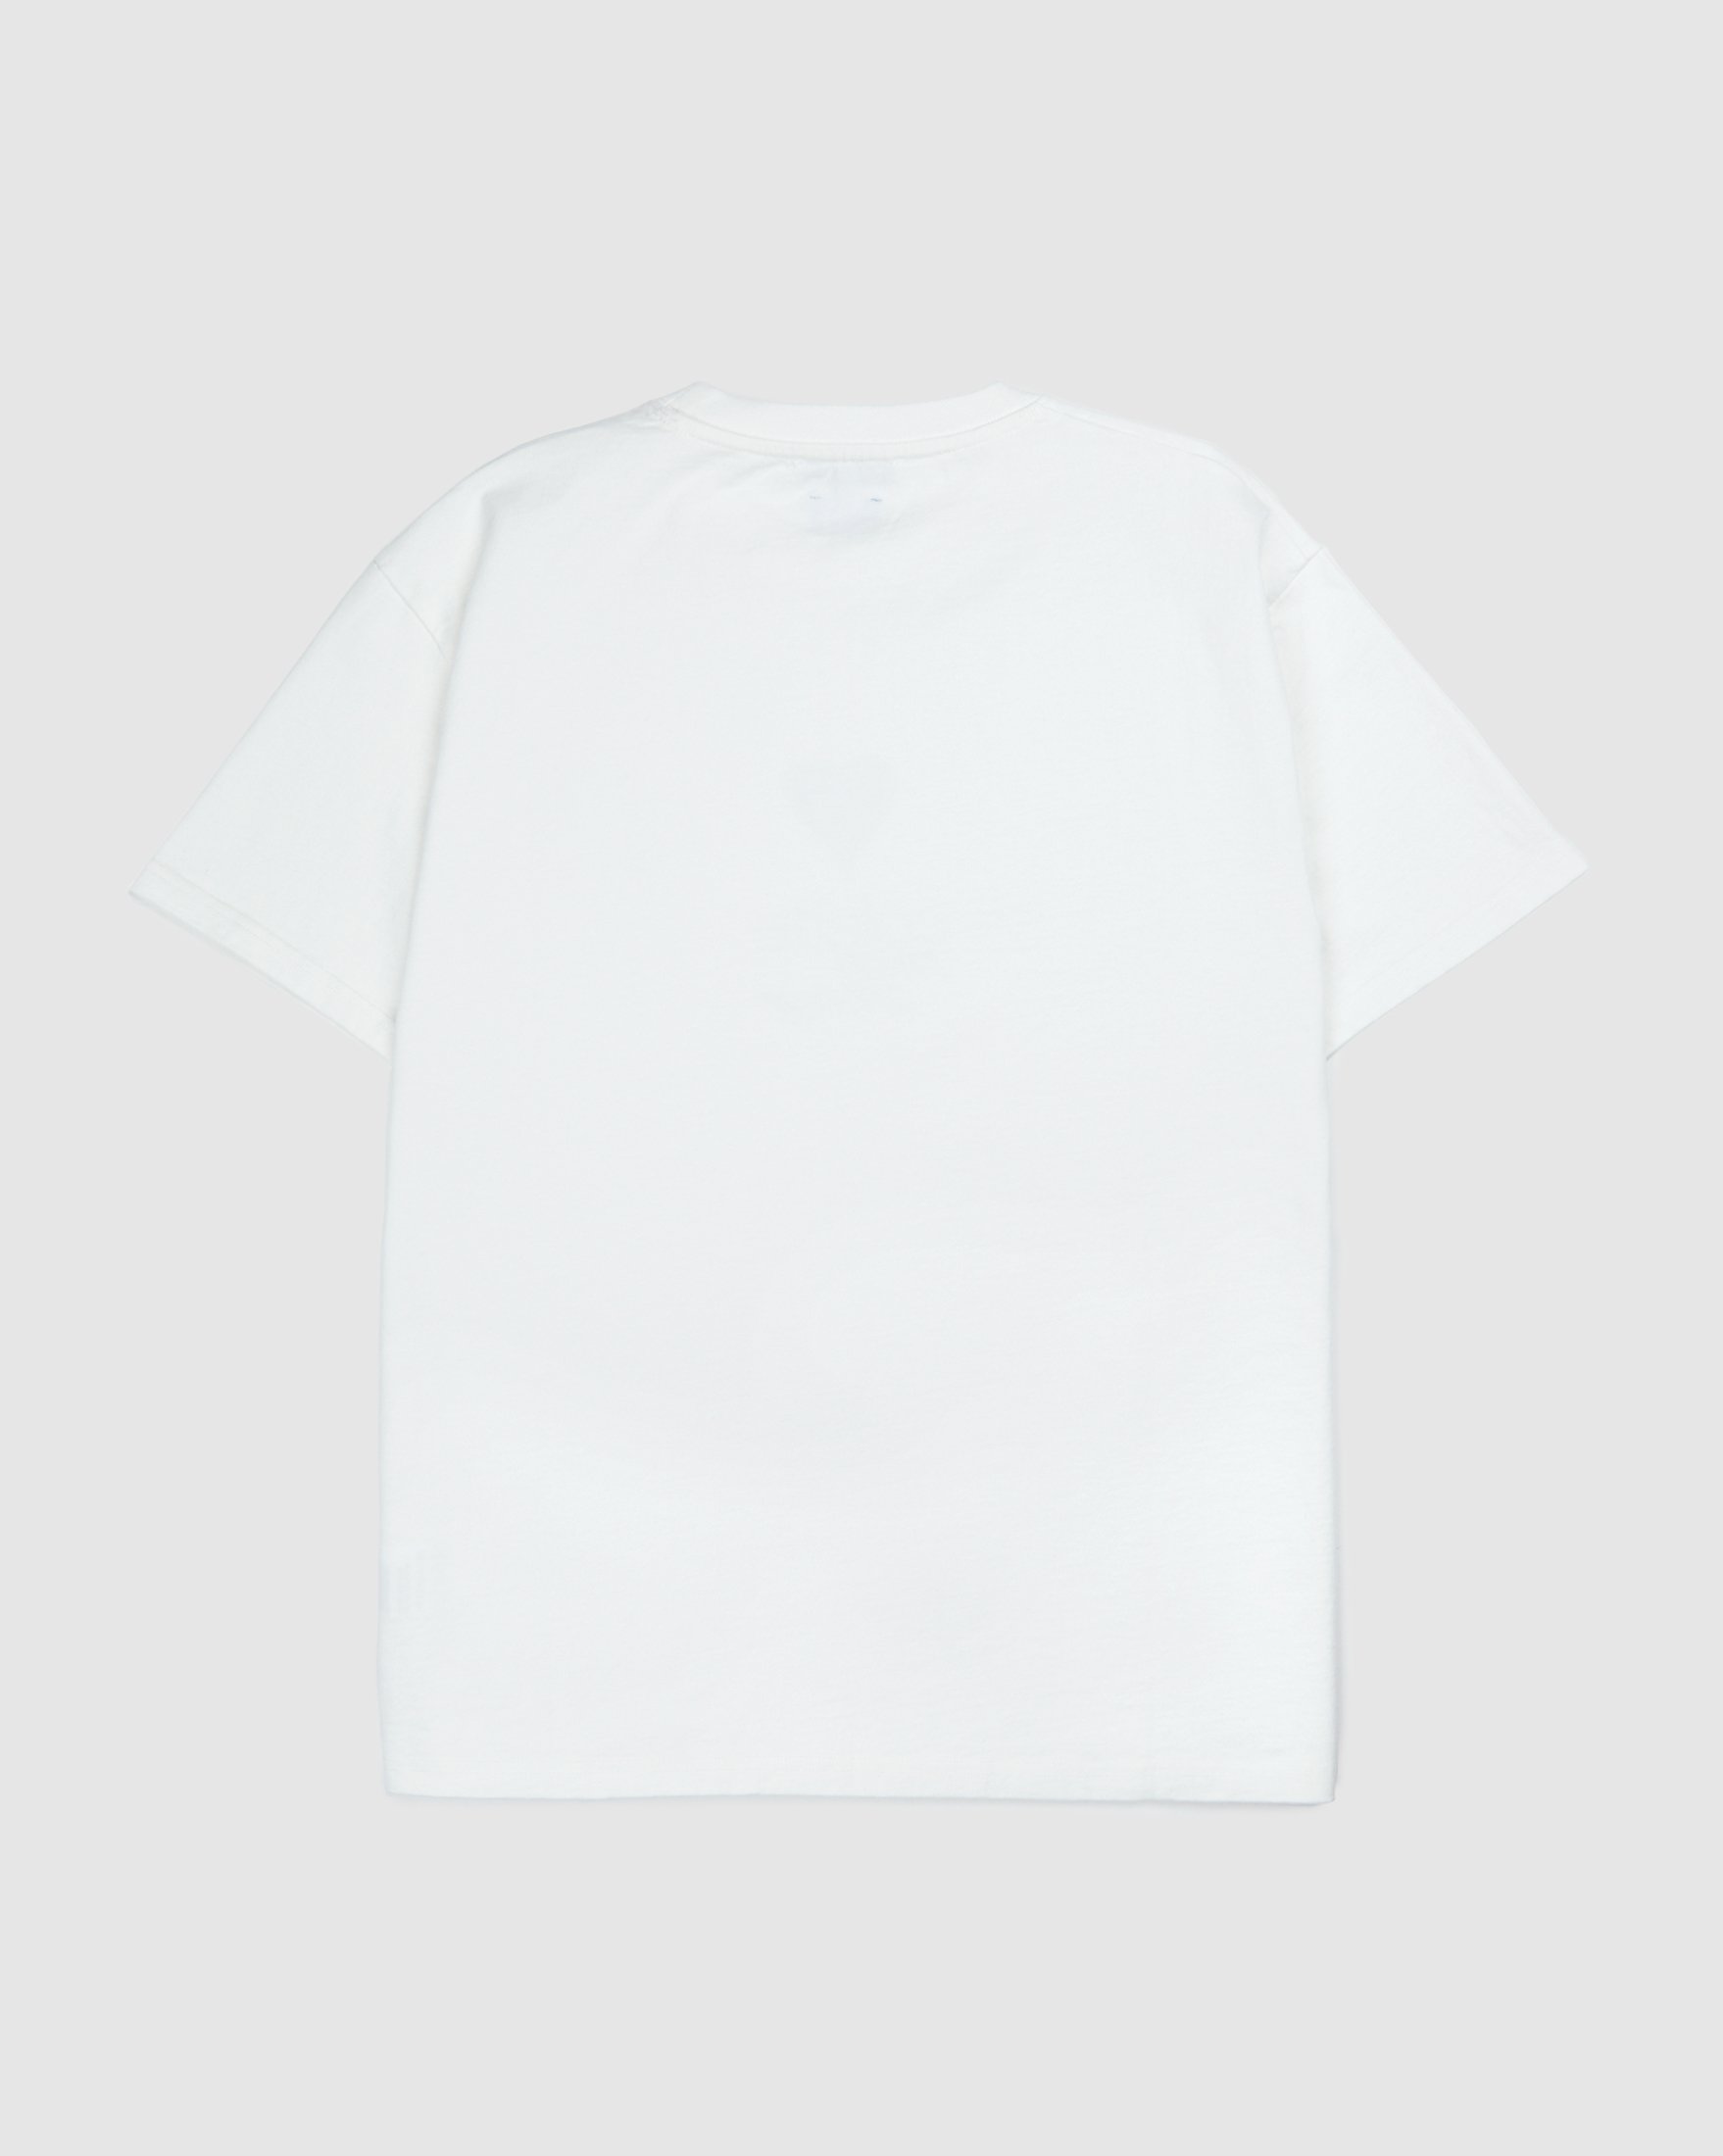 Colette Mon Amour - Heart T-Shirt White - Clothing - White - Image 2